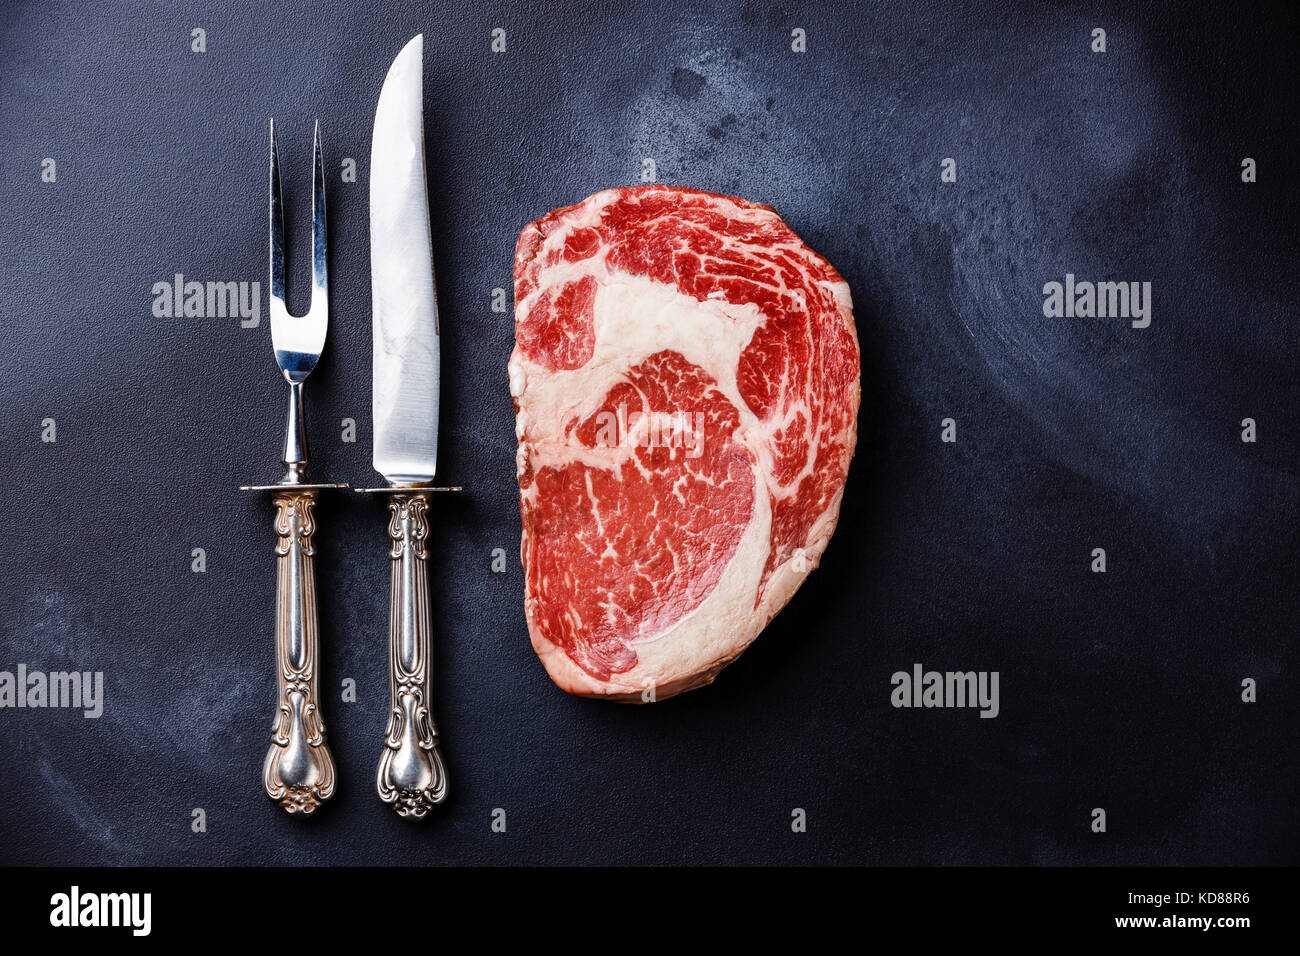 Raw fresh marbled meat Steak Rib eye Black Angus and fork and knife on dark background Stock Photo